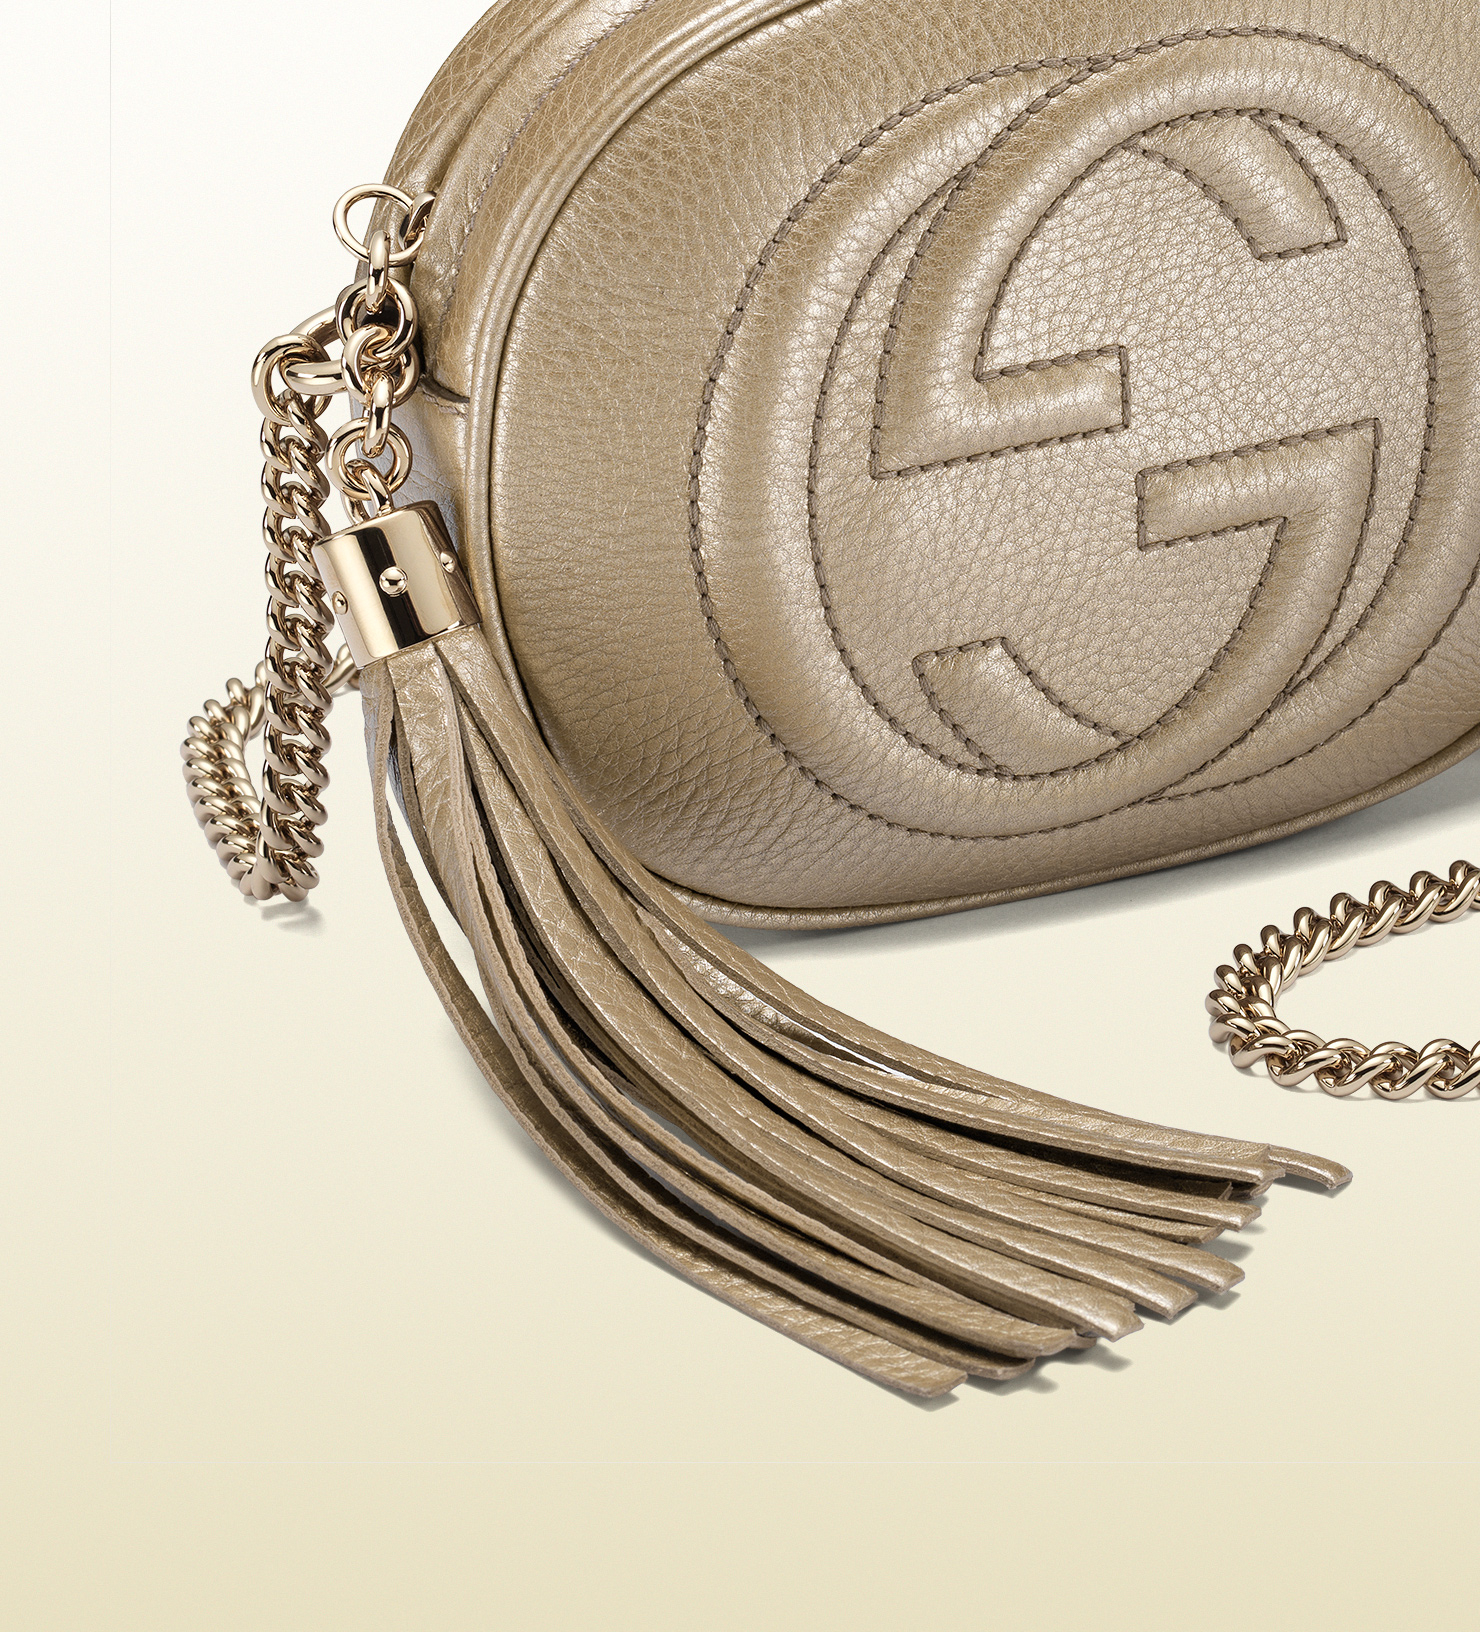 Gucci Soho Metallic Leather Mini Chain Bag in Beige (Natural) - Lyst